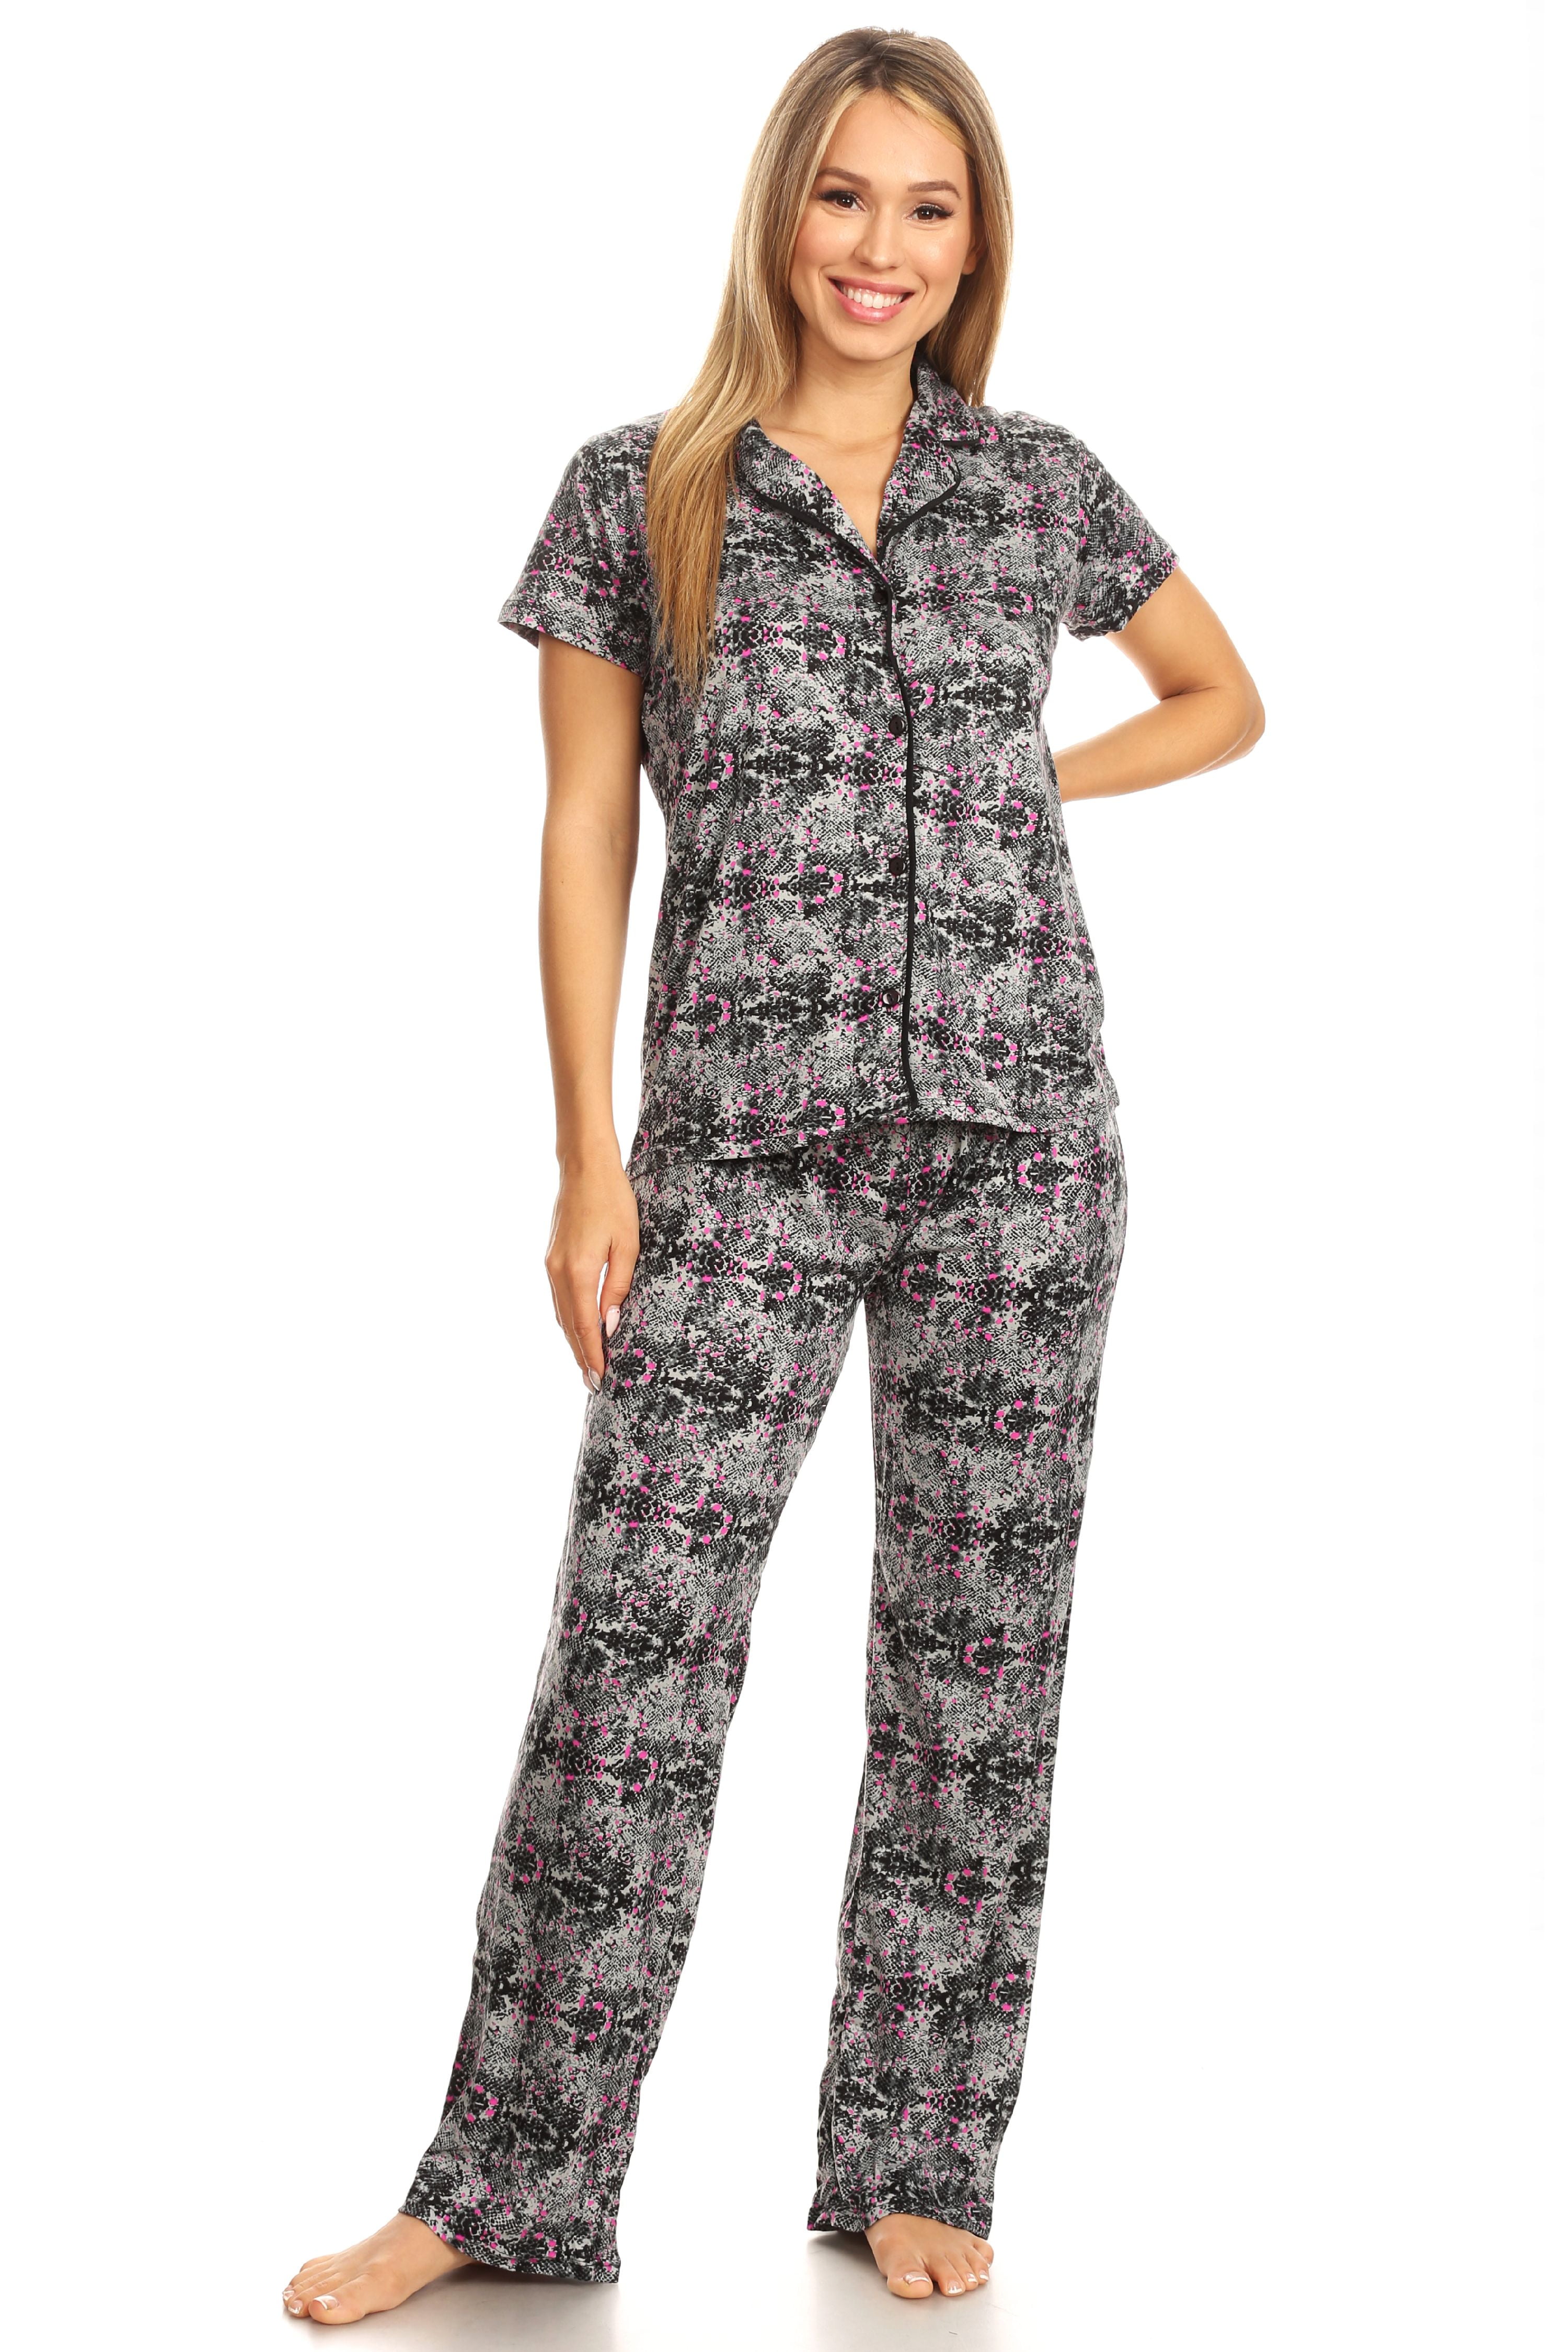 Premiere Fashion - Womens Sleepwear Pajamas Set Woman ...